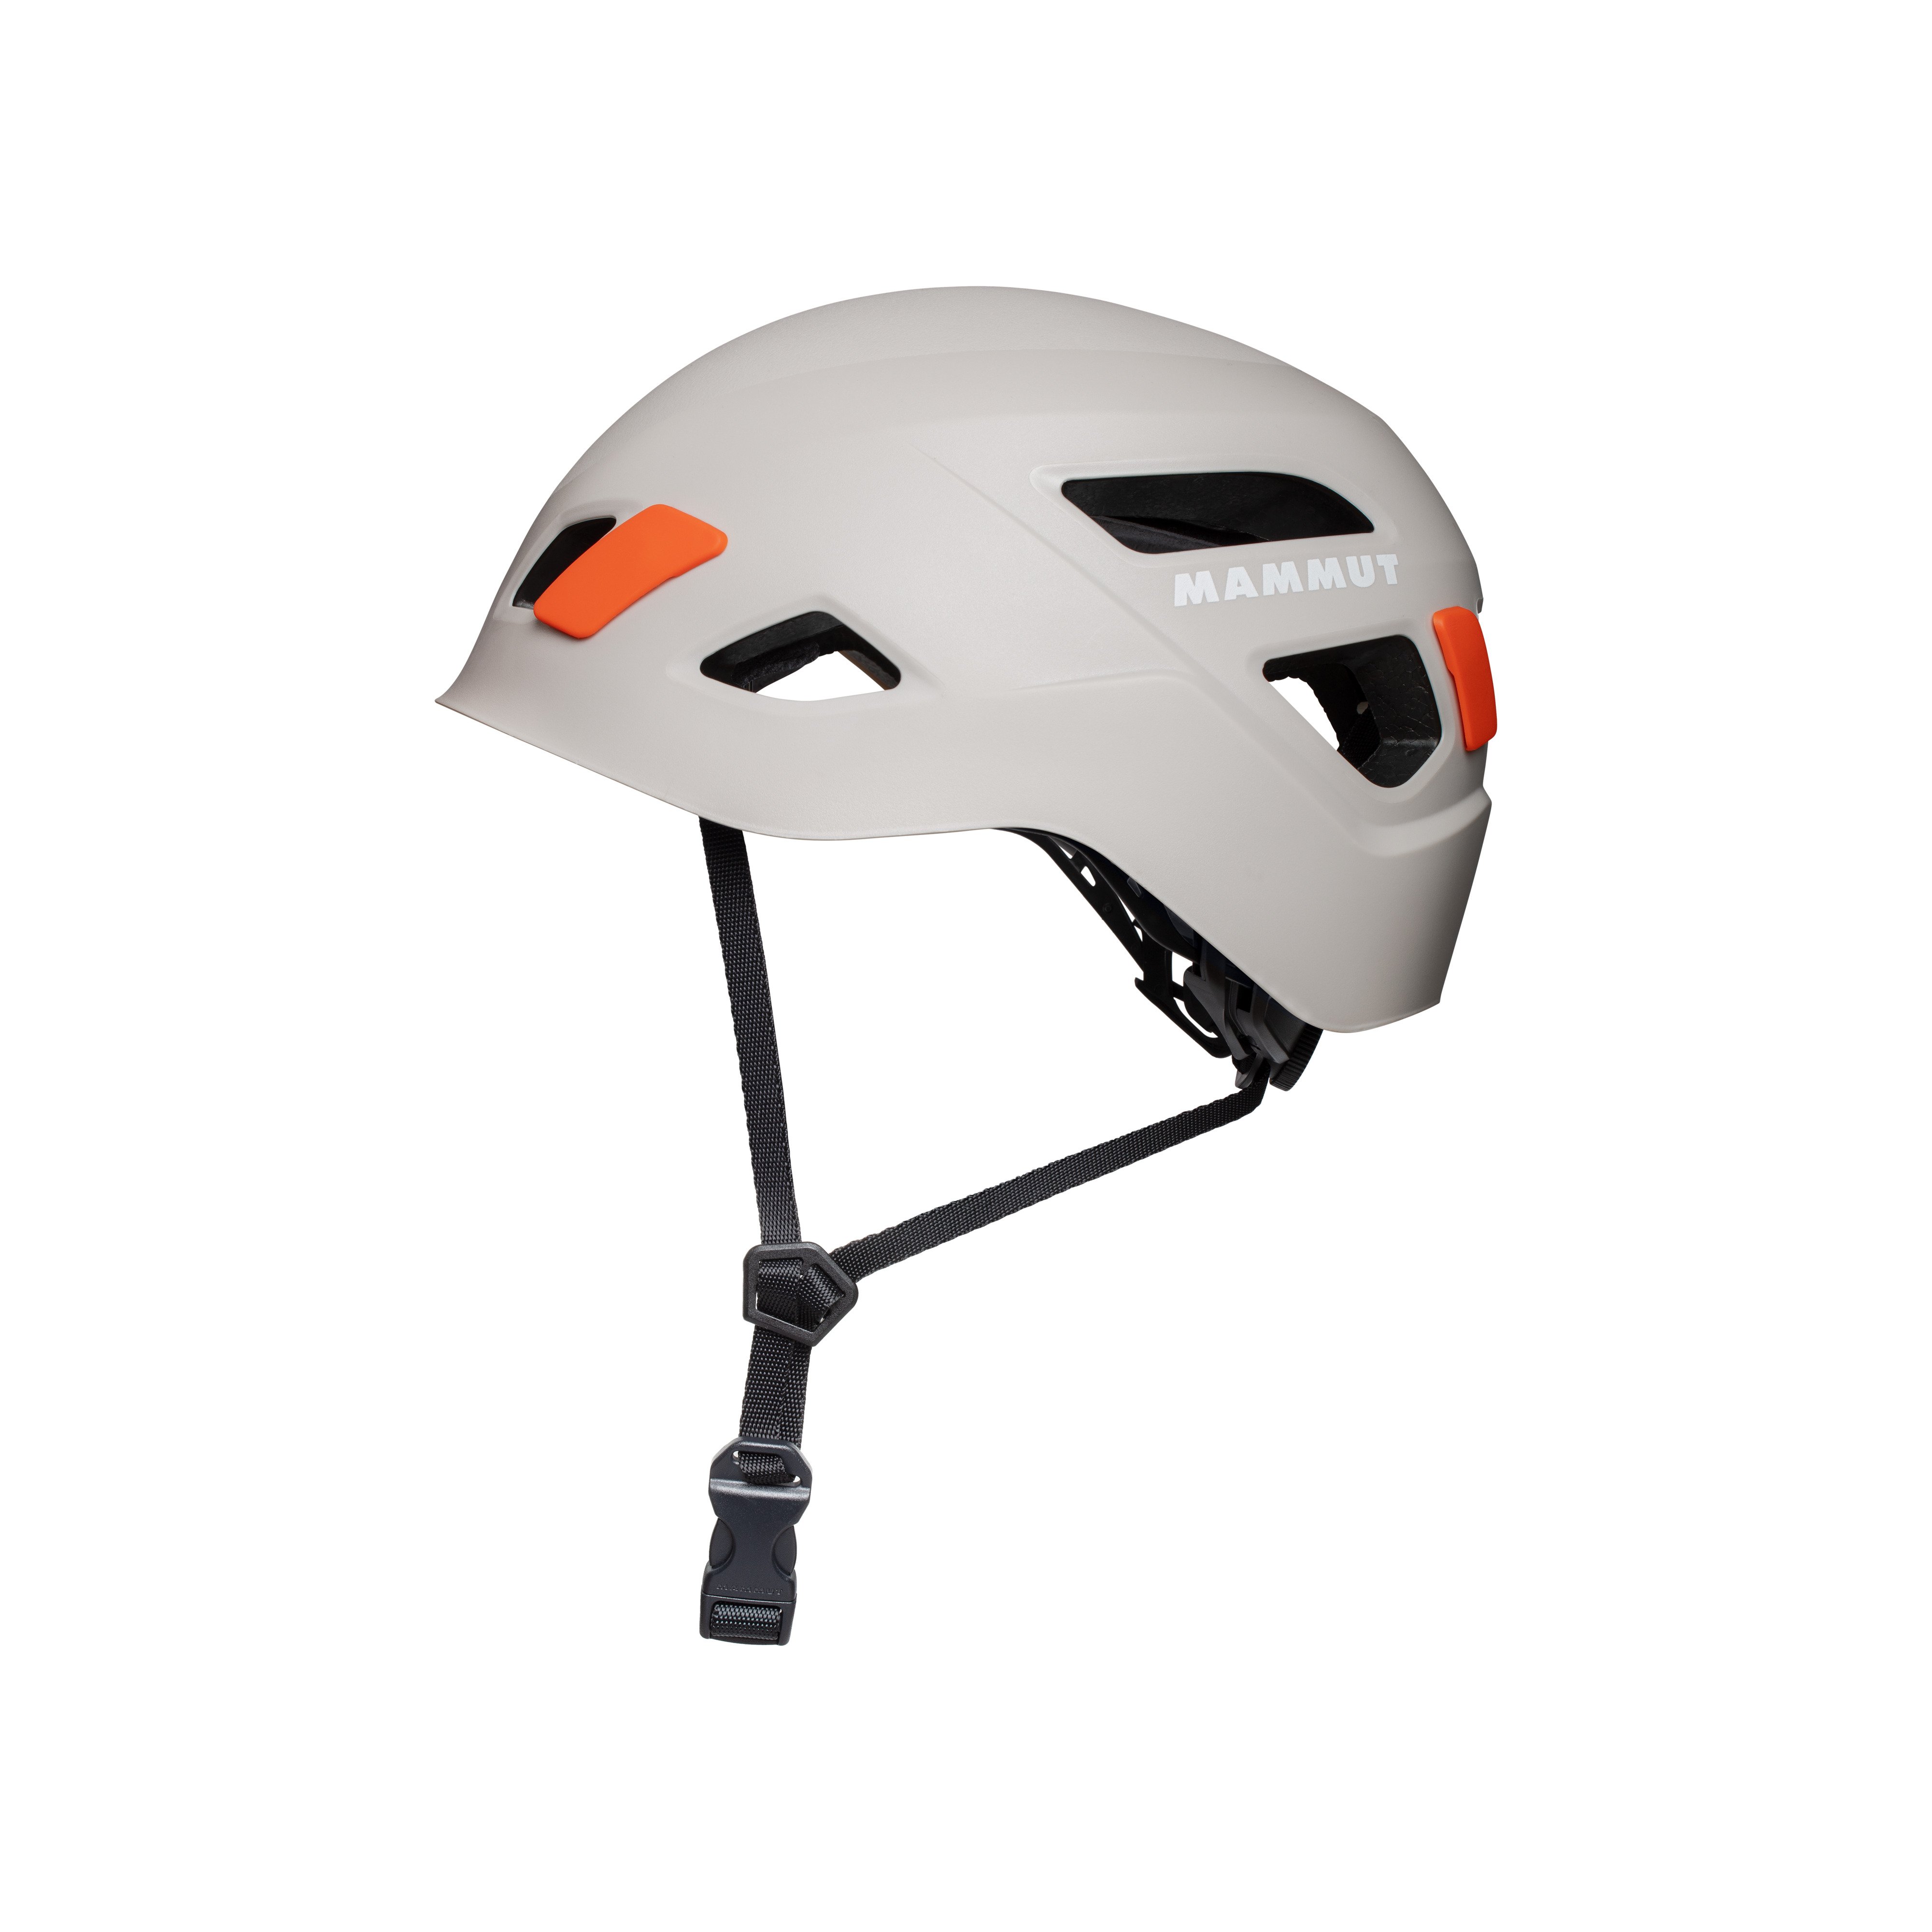 Skywalker 3.0 Helmet - grey, one size product image